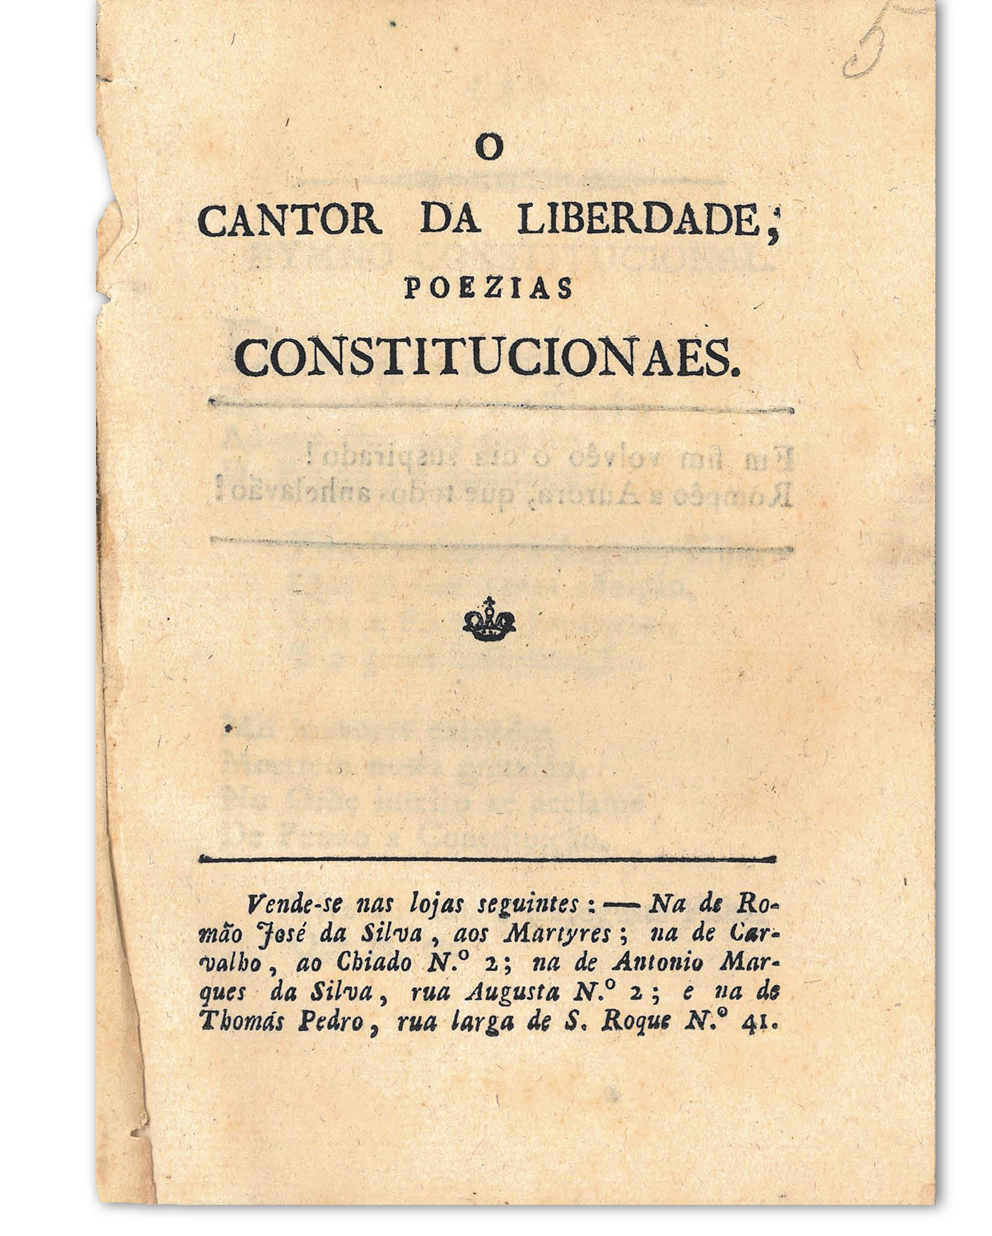 O cantor da liberdade : poesias constitucionais. Lisboa : [s.n., s.d.]. Cota: 4/1820